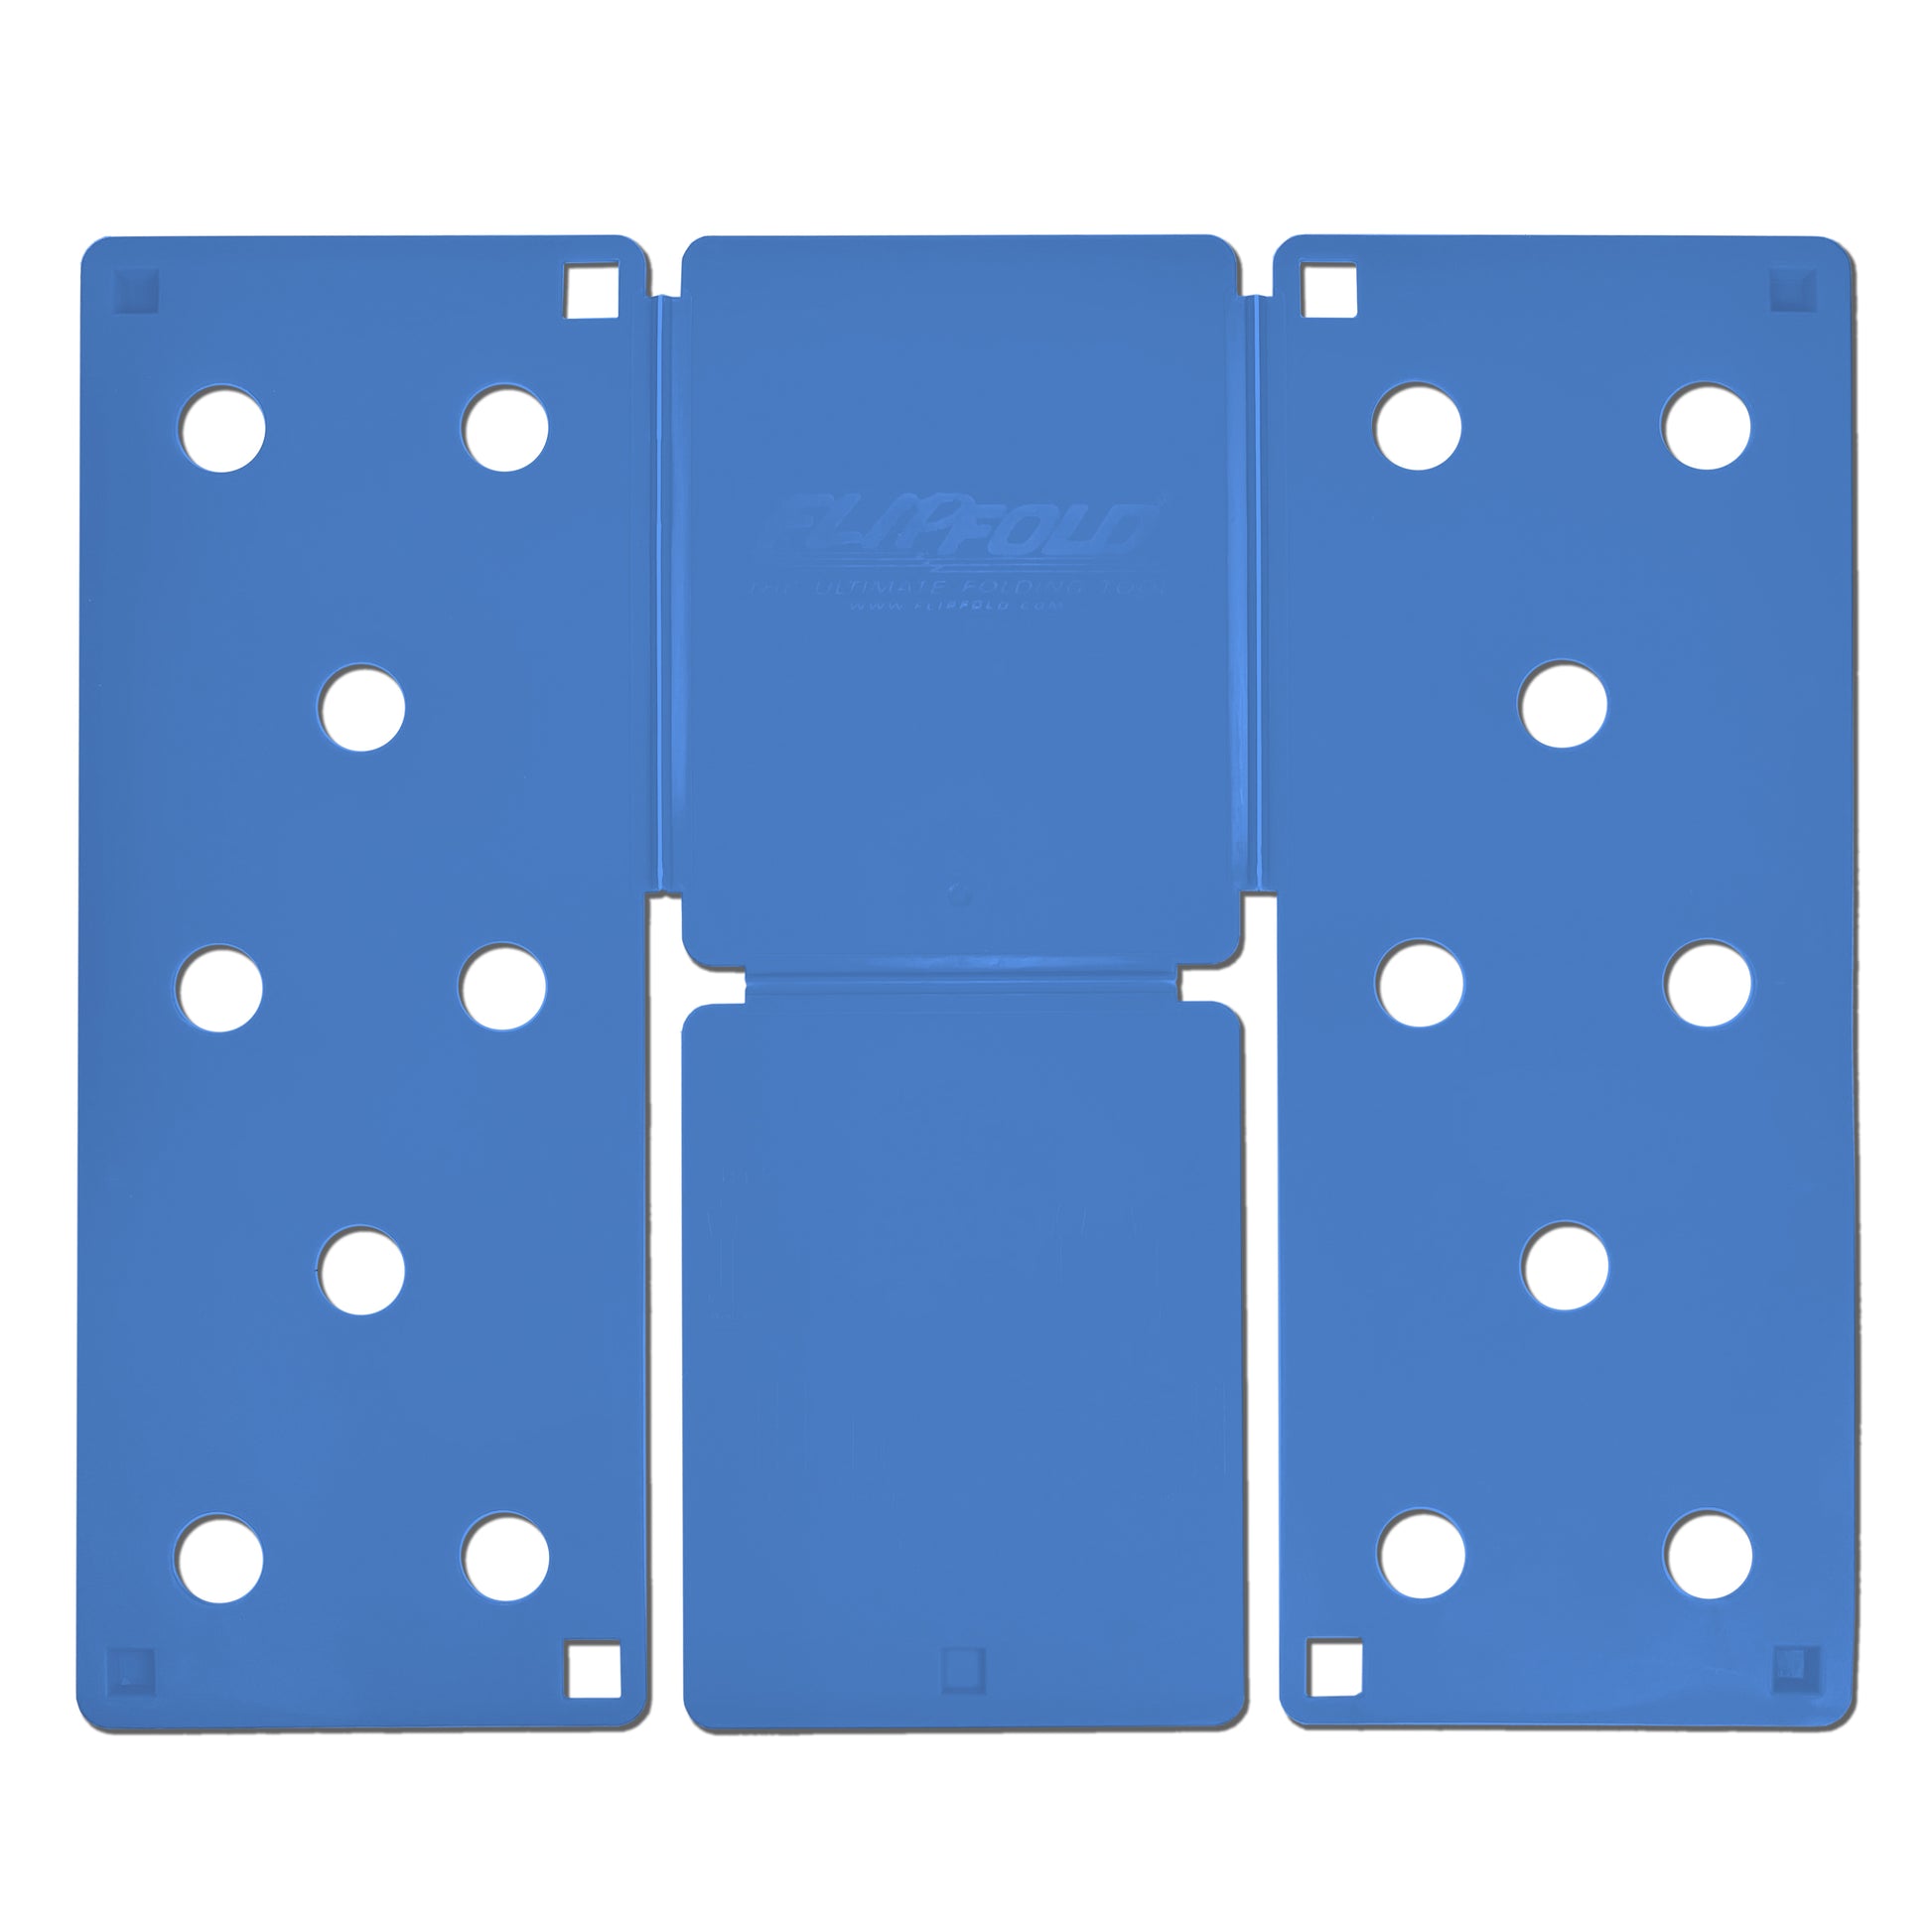 FlipFold Laundry Folding Board Tool - Adult Sky Blue